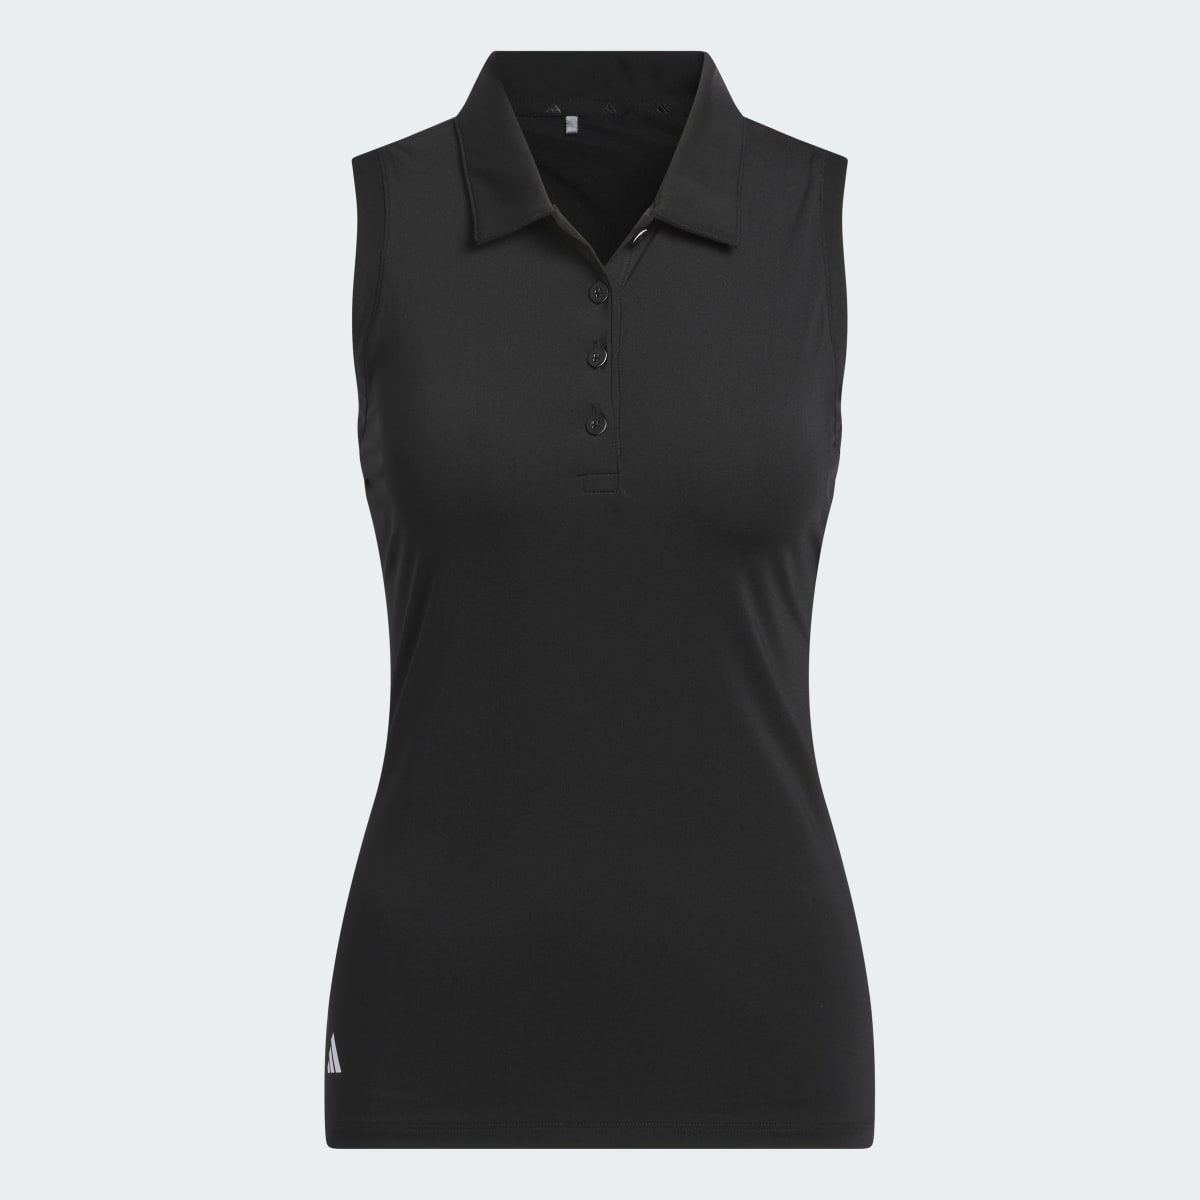 Adidas Women's Ultimate365 Solid Sleeveless Poloshirt. 5